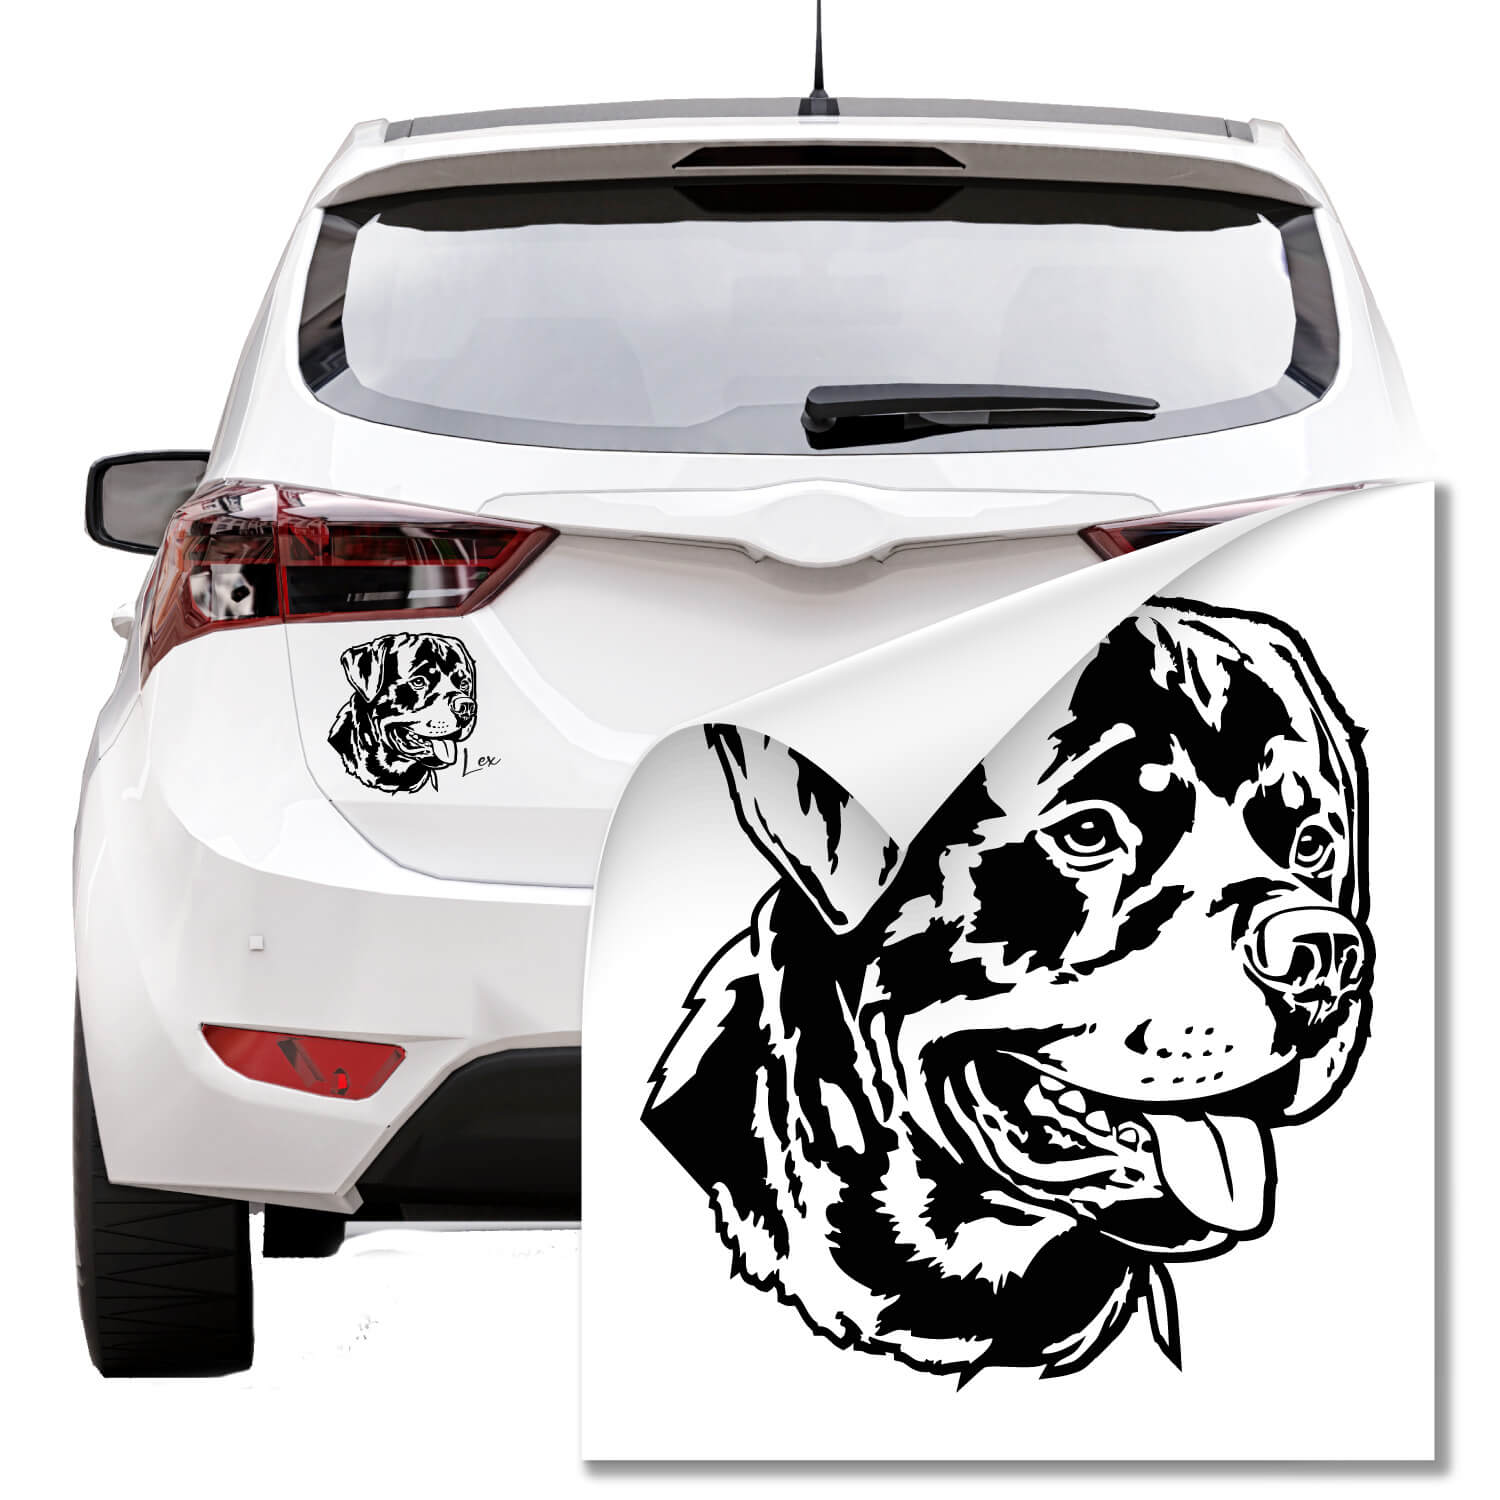 YJZT 11 CM X 9,6 CM Rottweiler Hund Auto Dekoration PVC Auto